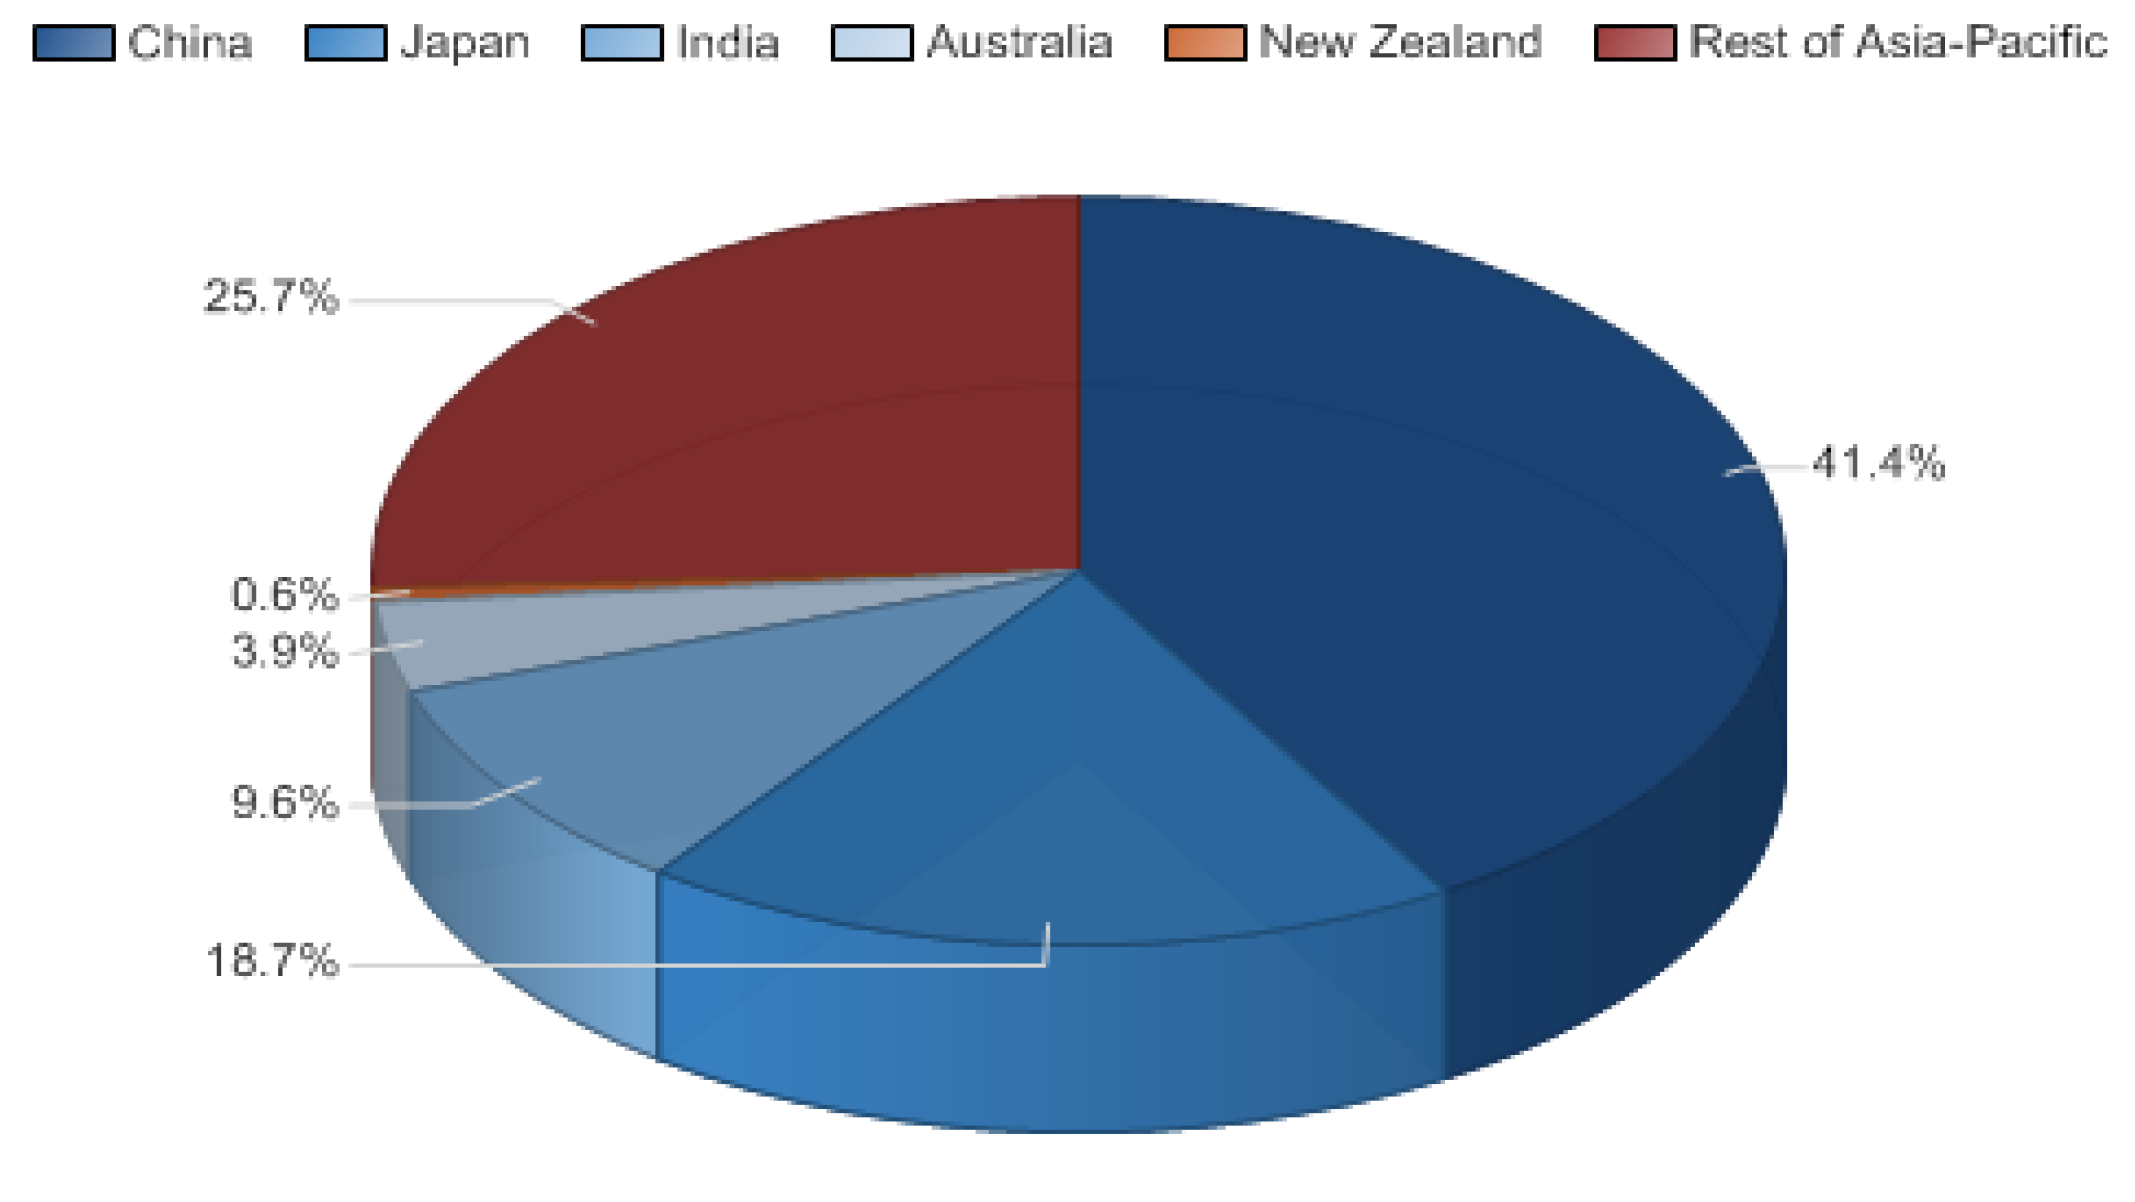  Geographical segmentation of wireless telecom in NZ